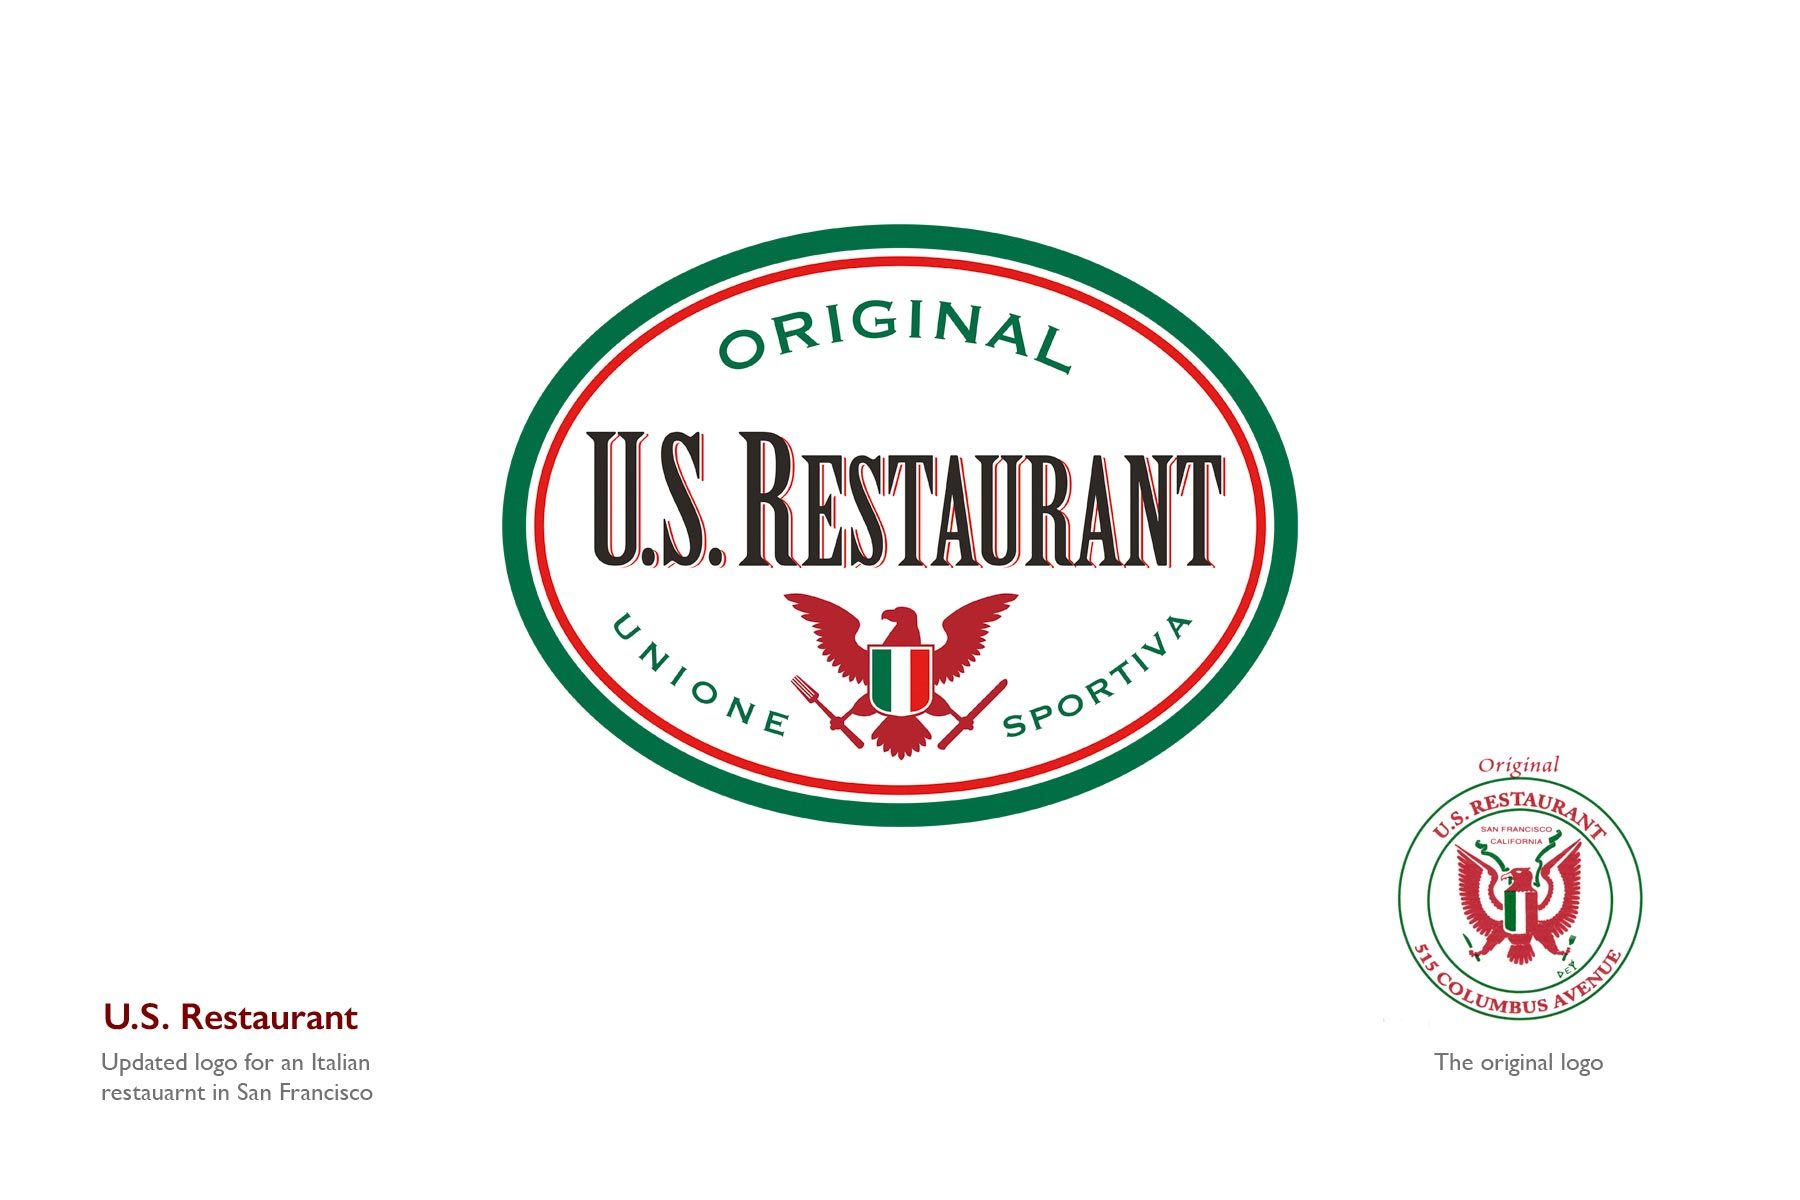 U.S. Restaurant